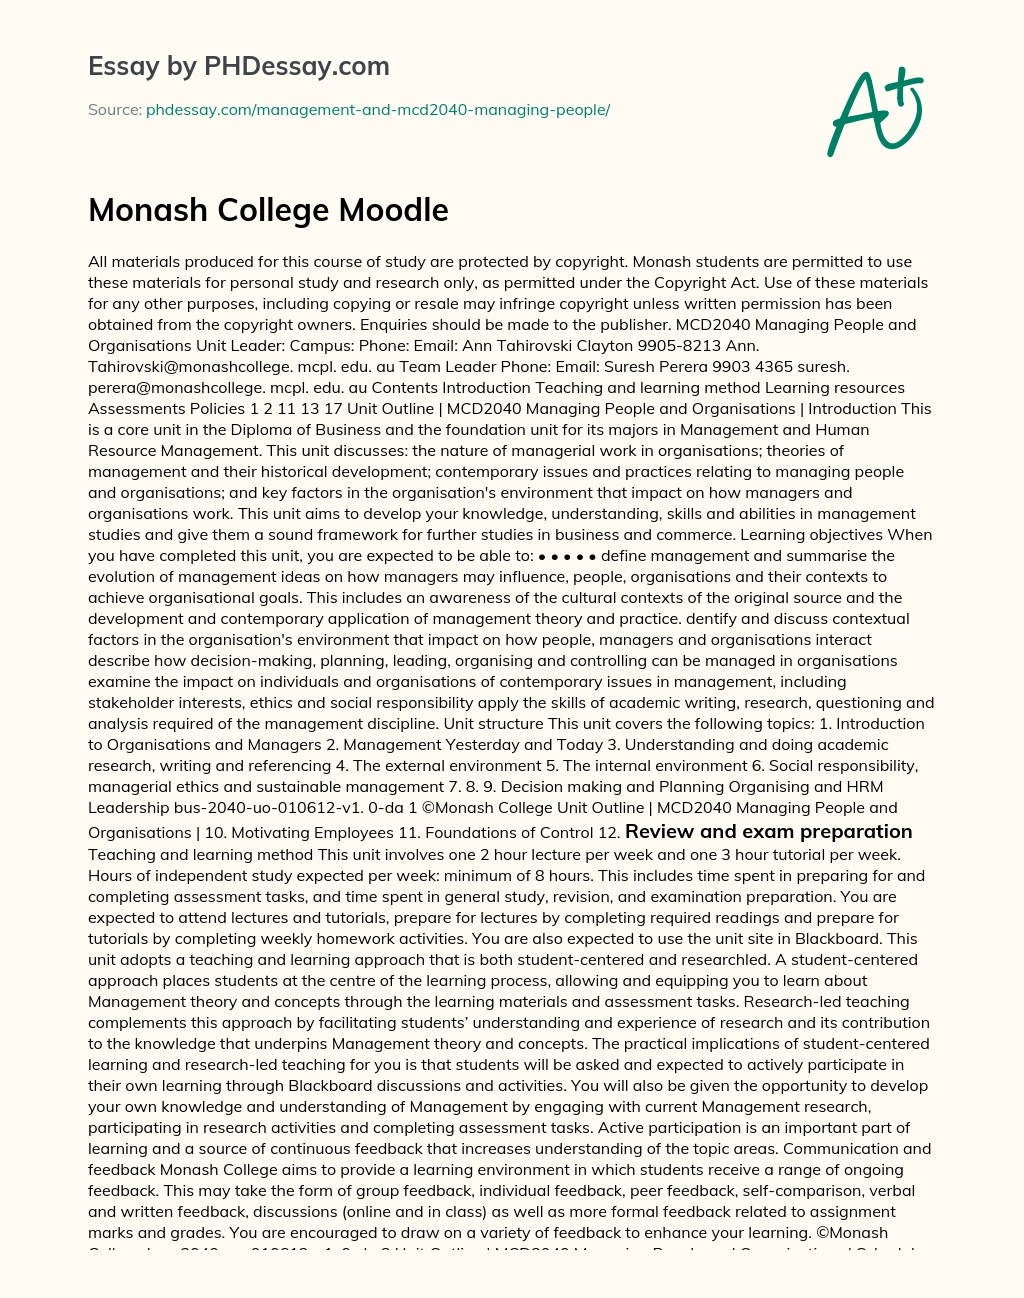 Monash College Moodle essay